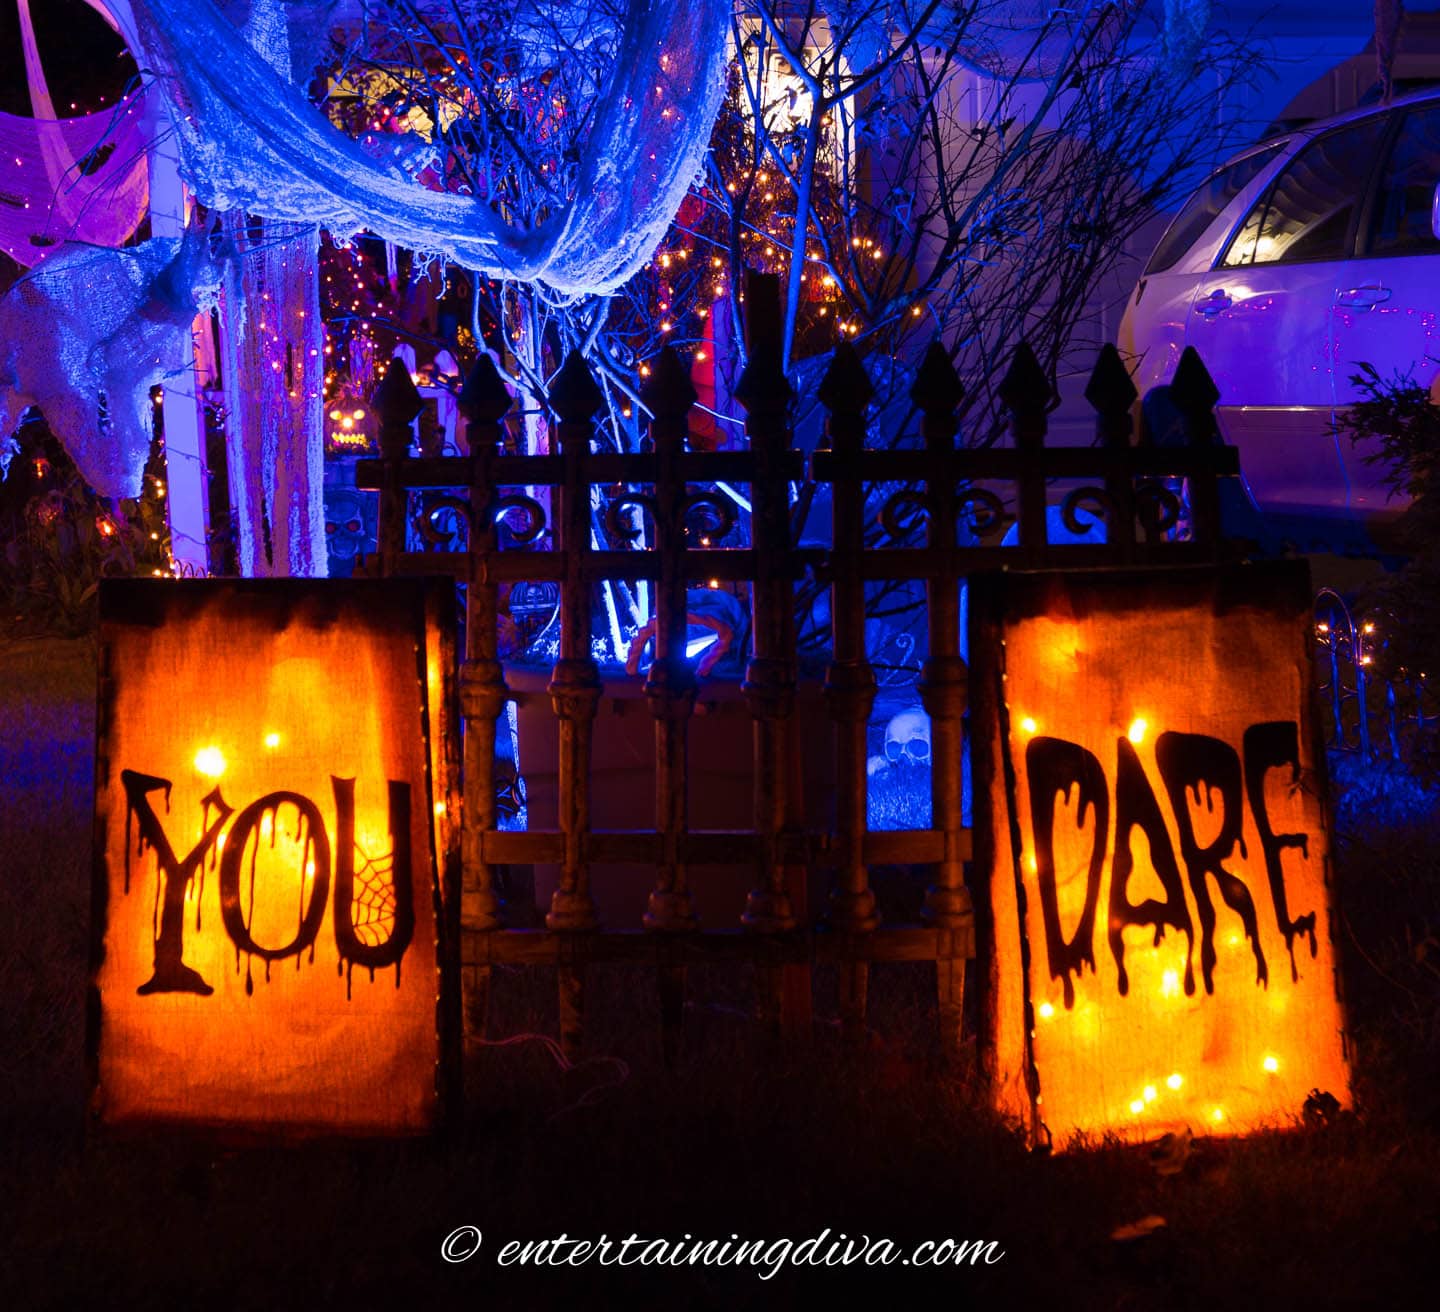 Halloween luminaries that say "You Dare"